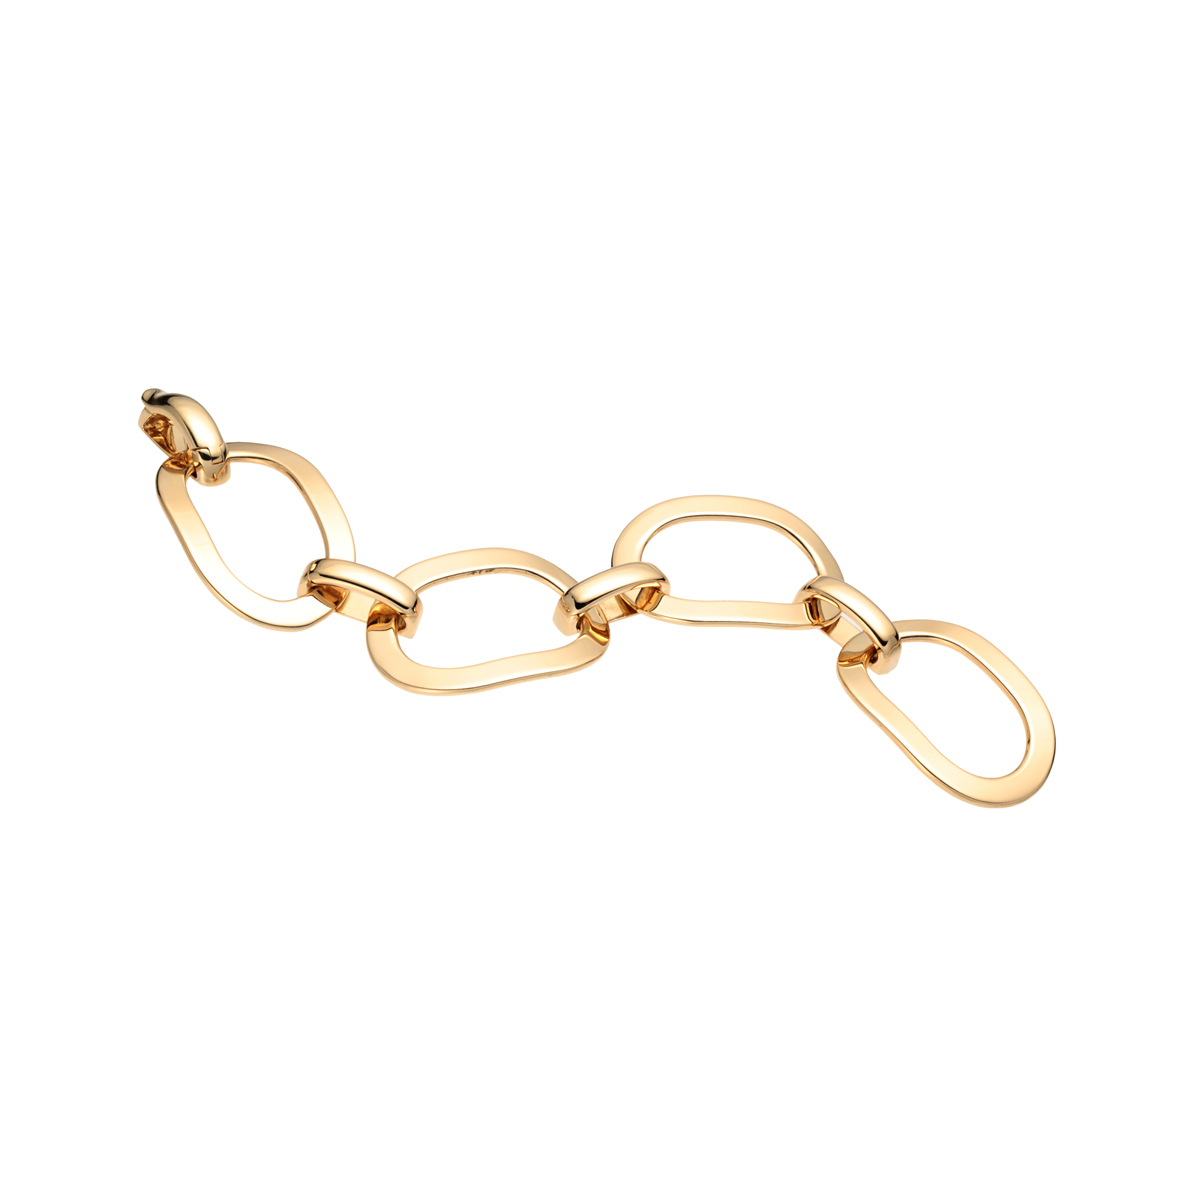 Flat Yellow Gold Link Chain Bracelet